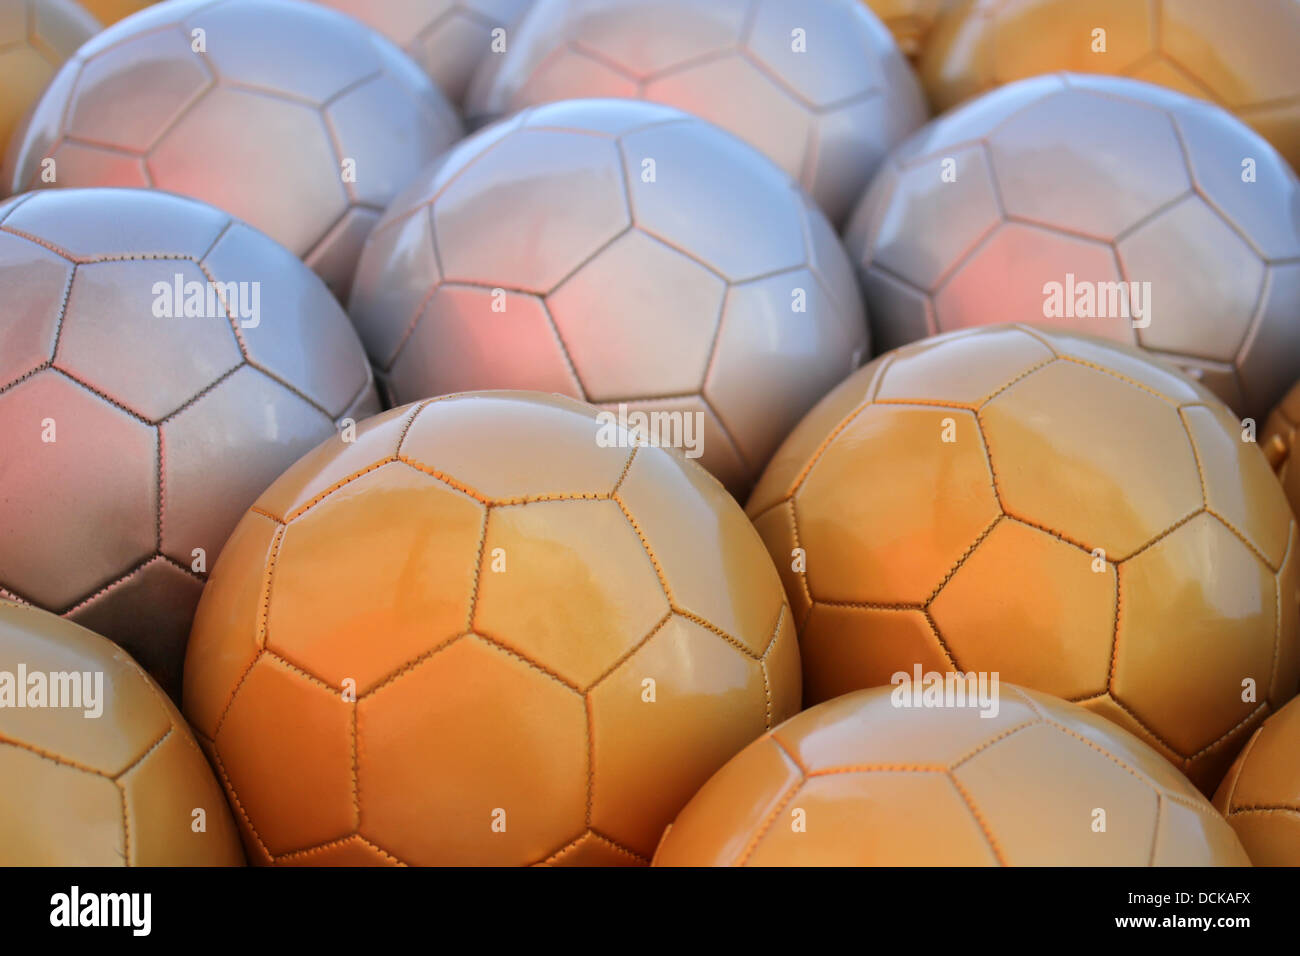 Les ballons de football Historique Banque D'Images